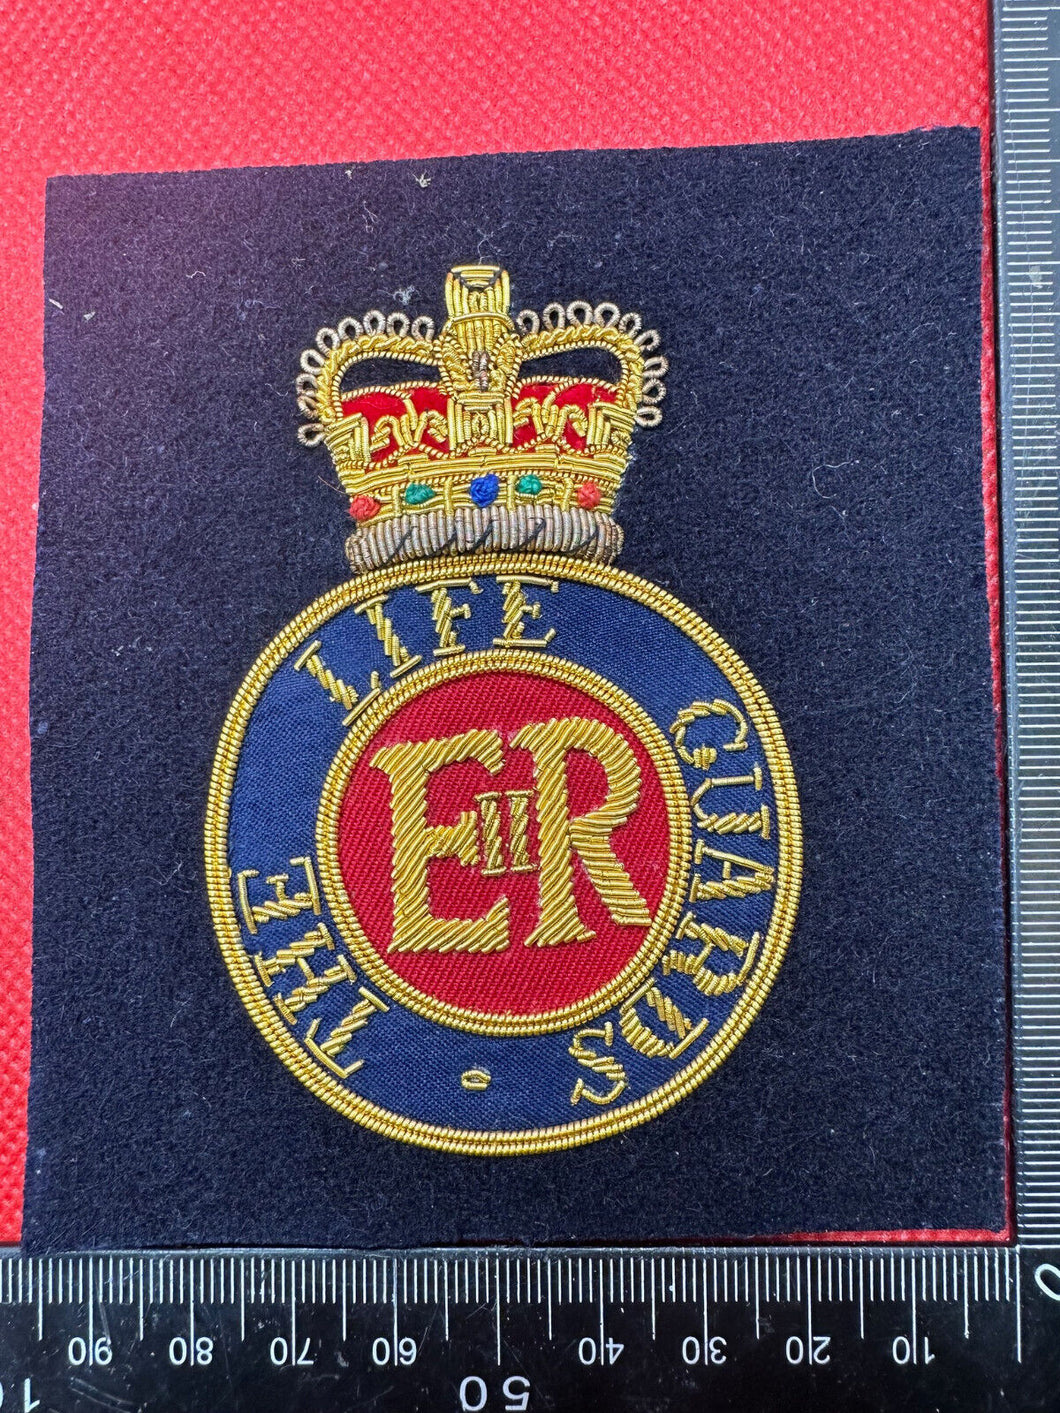 British Army Bullion Embroidered Blazer Badge - The Life Guards